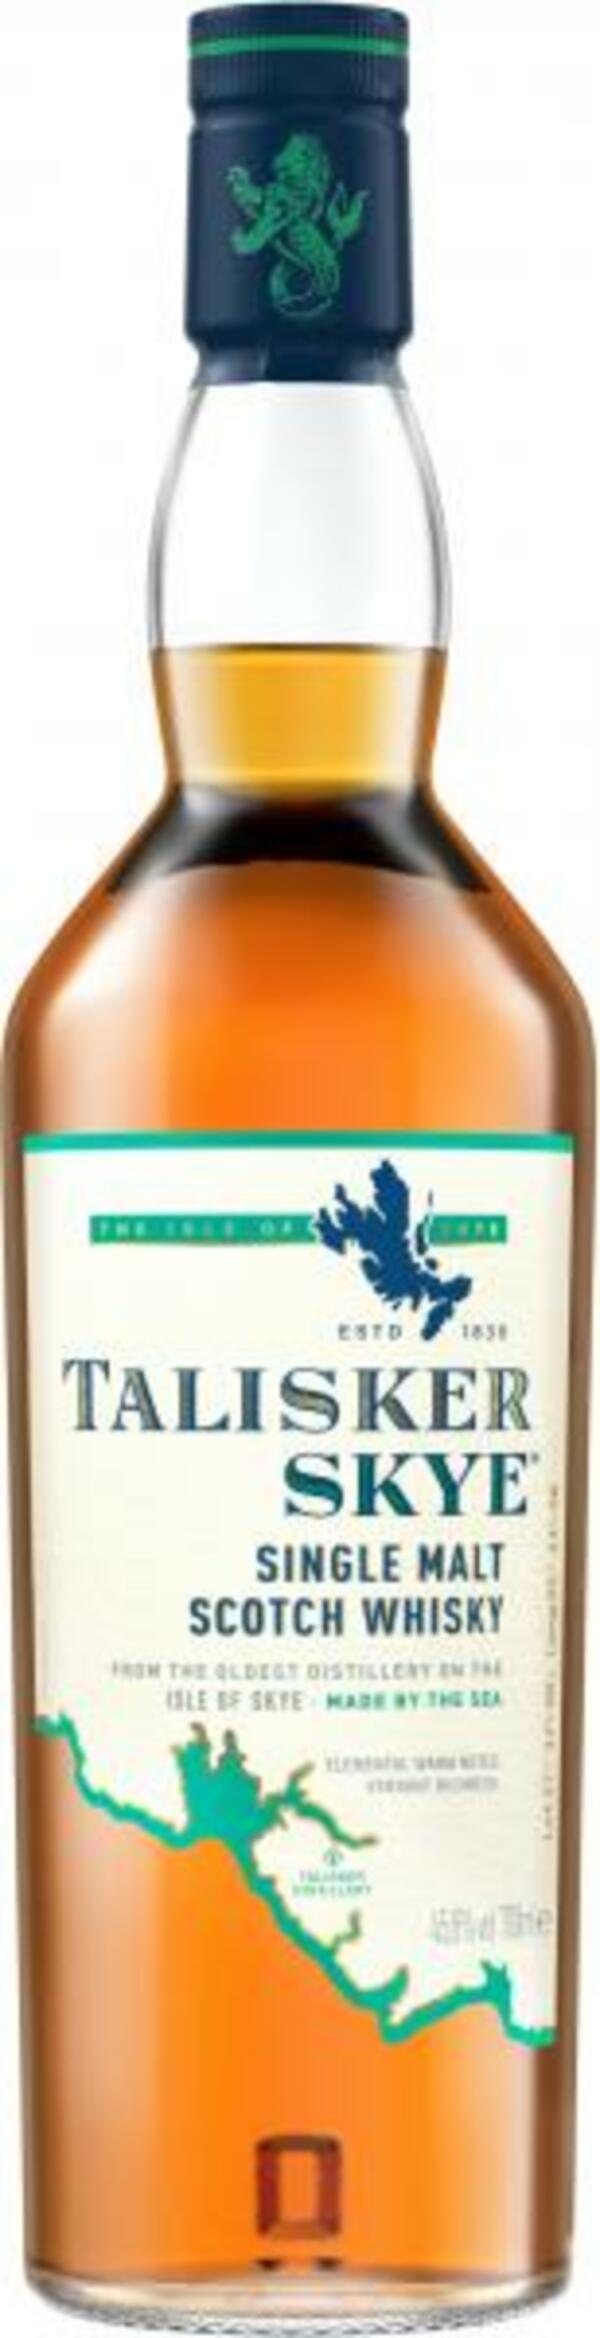 Bild 1 von Talisker Skye Single Malt Scotch Whiskey